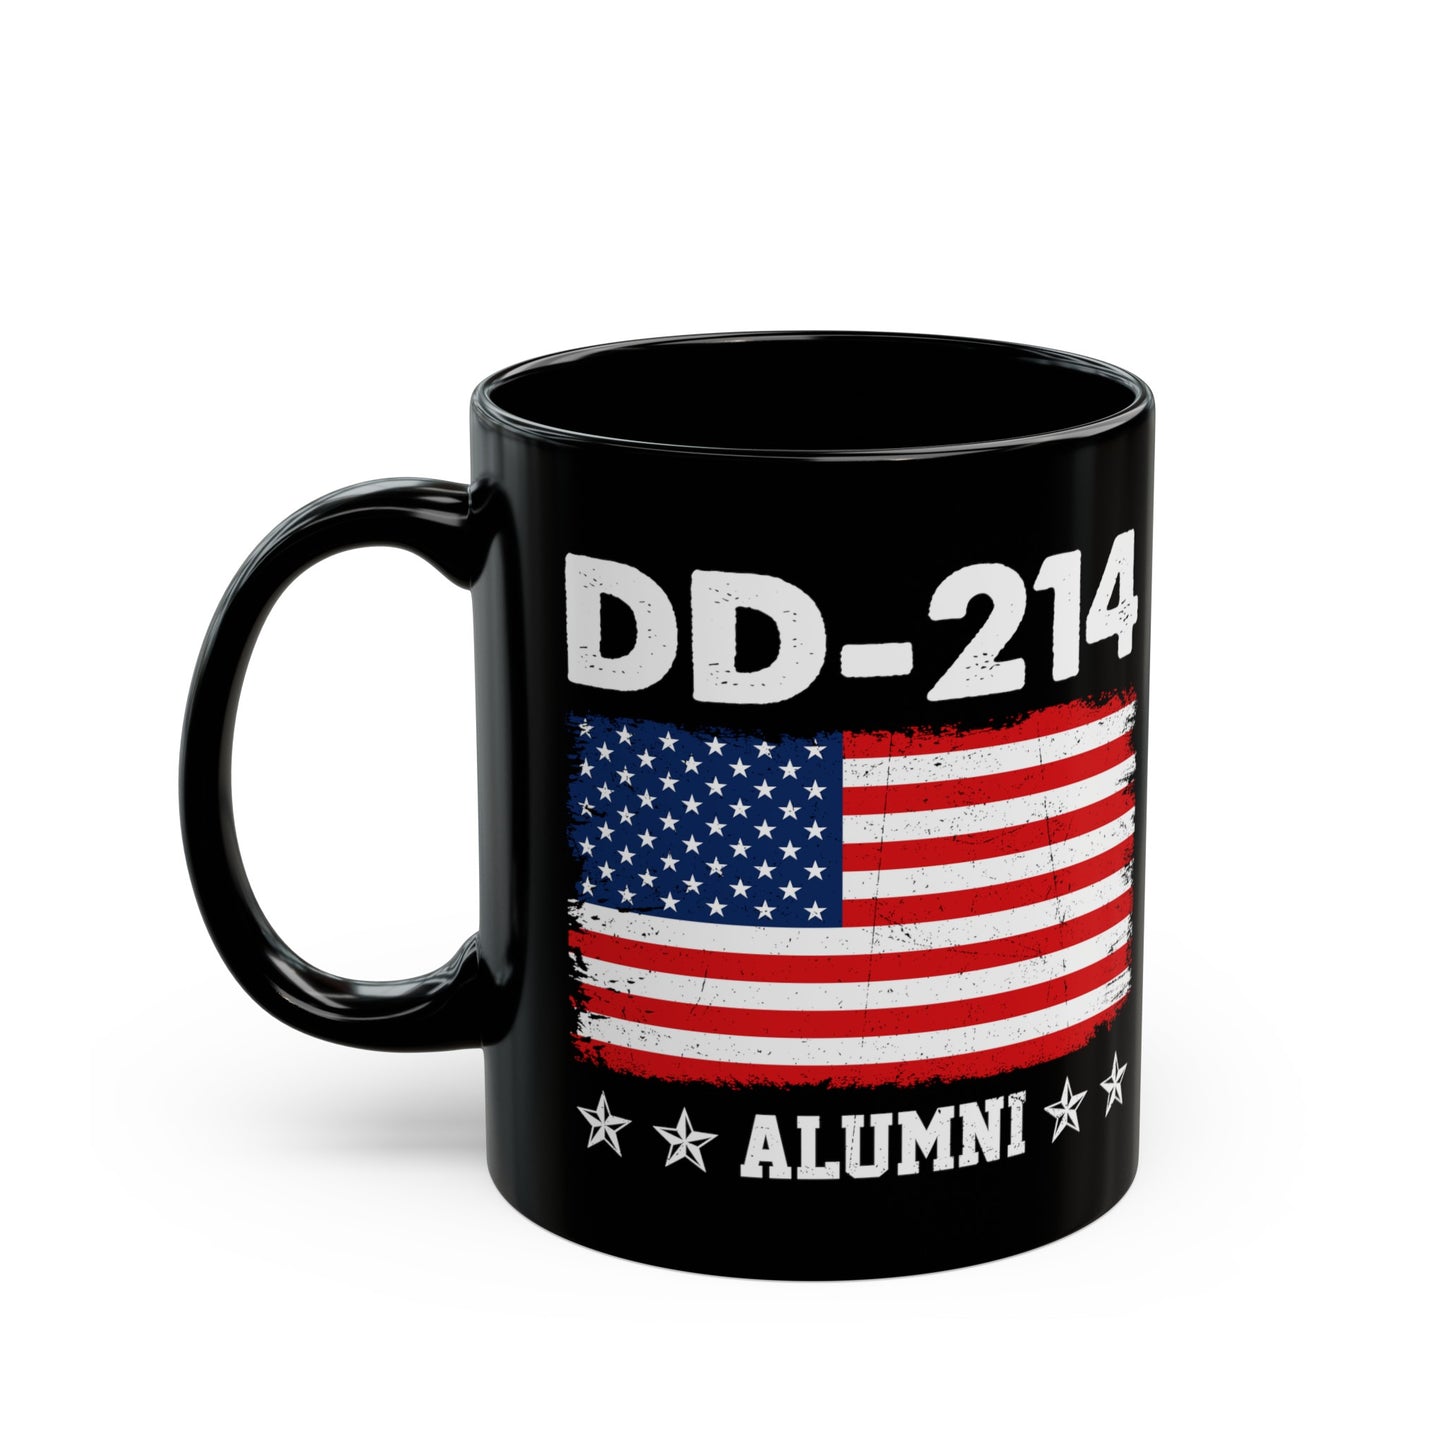 D-214 Alumni US Flag Mug - 11 oz